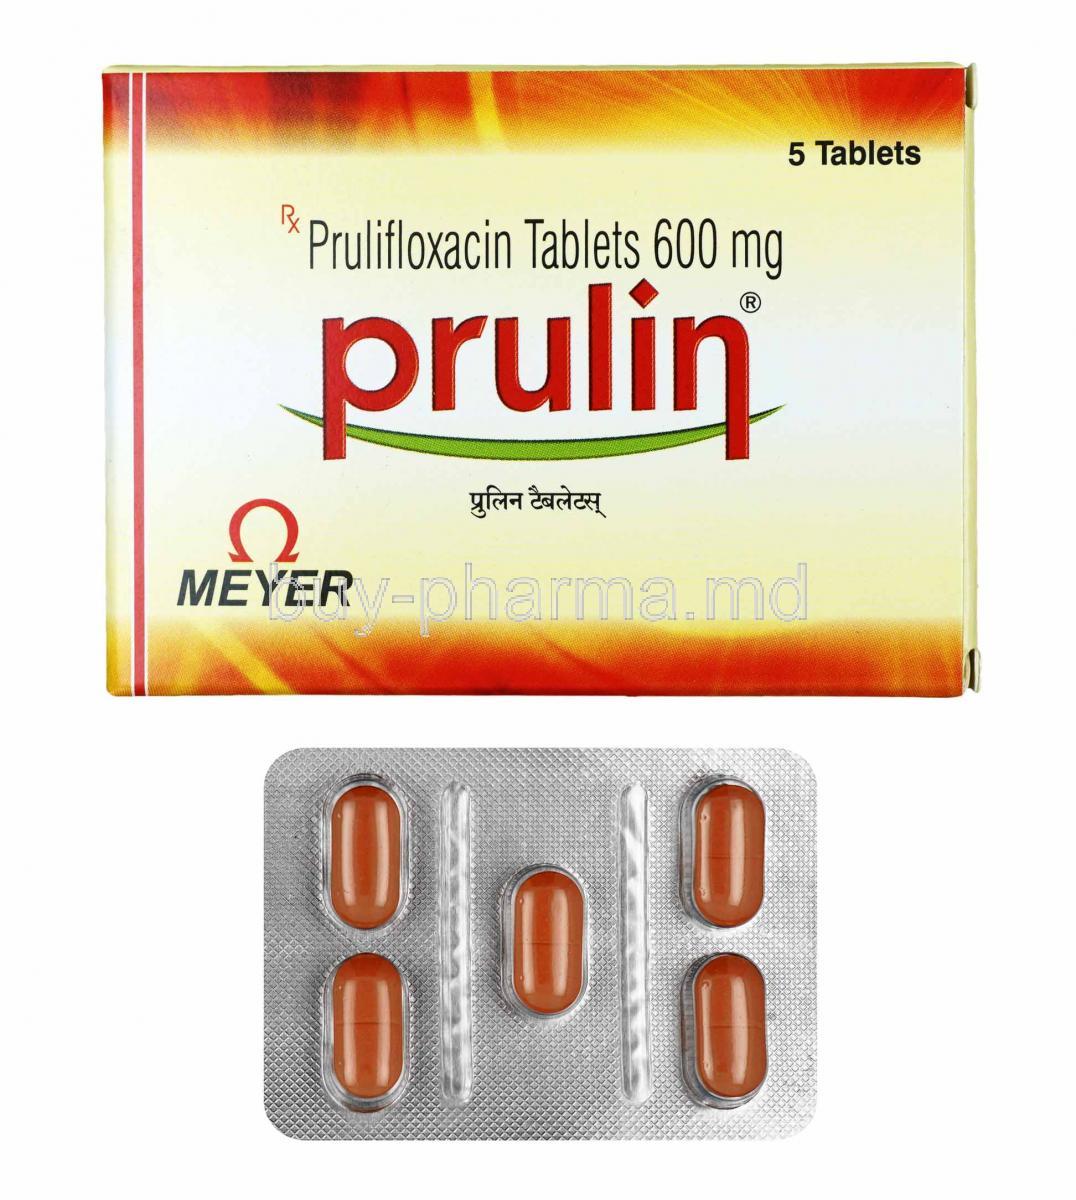 Prulin, Prulifloxacin 600mg box and tablets